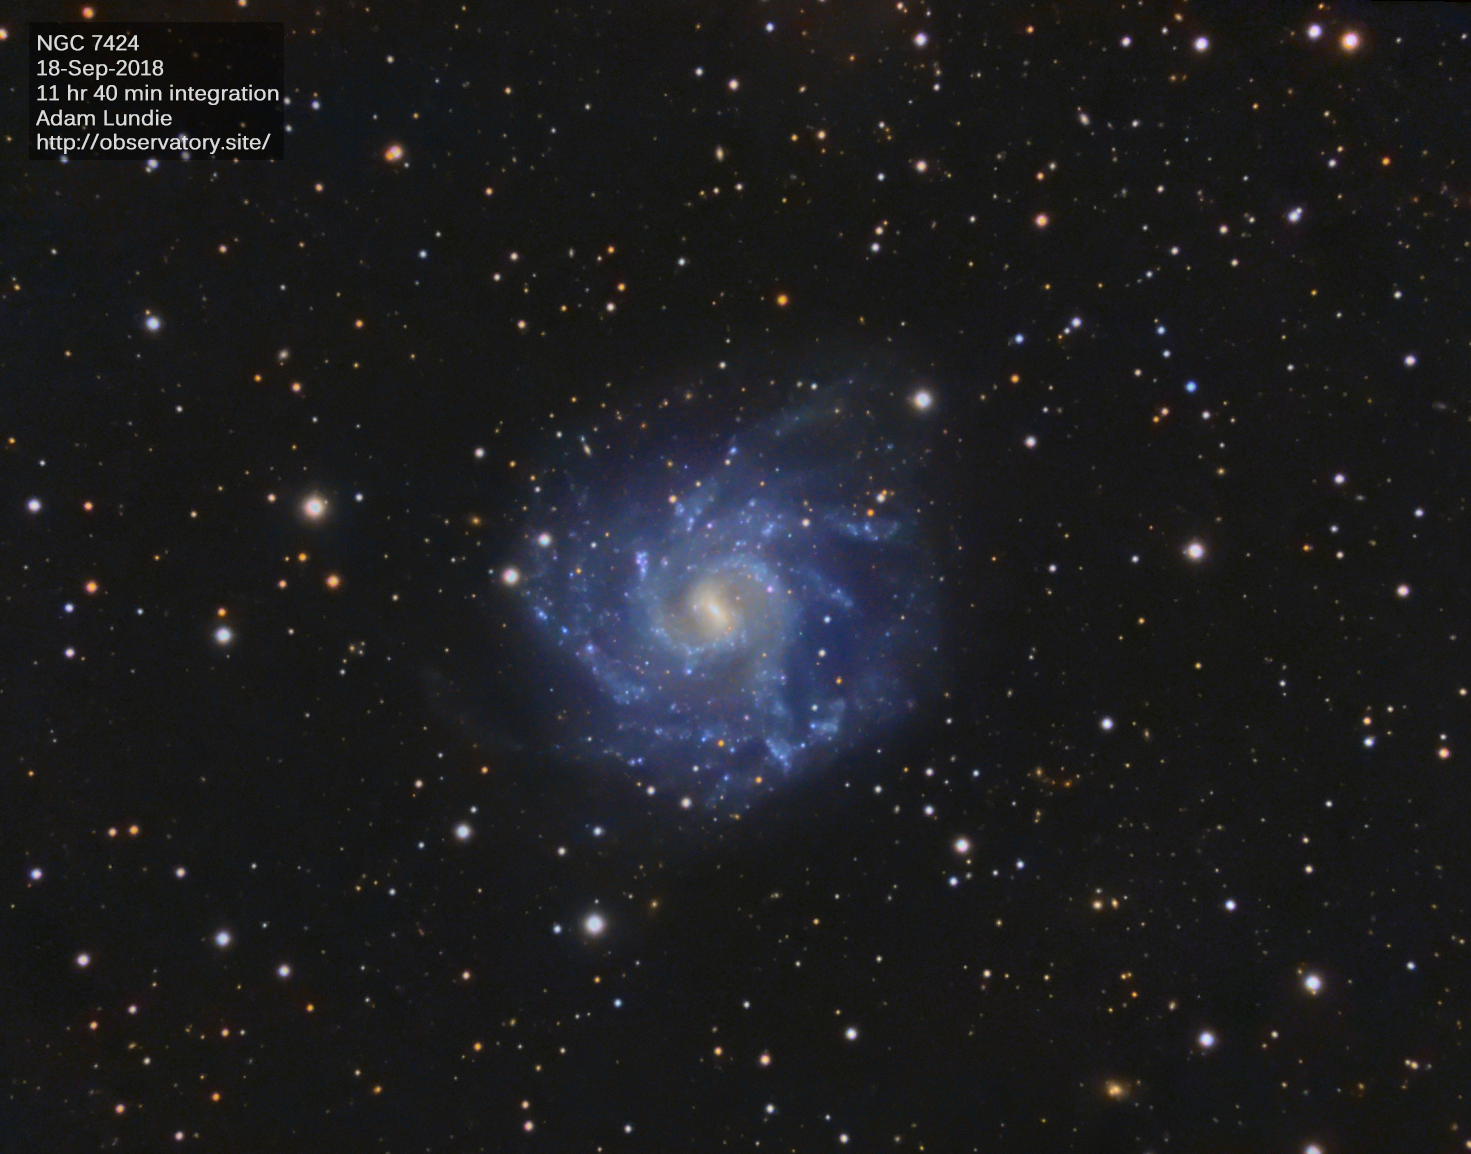 Grand Spiral Galaxy NGC7424